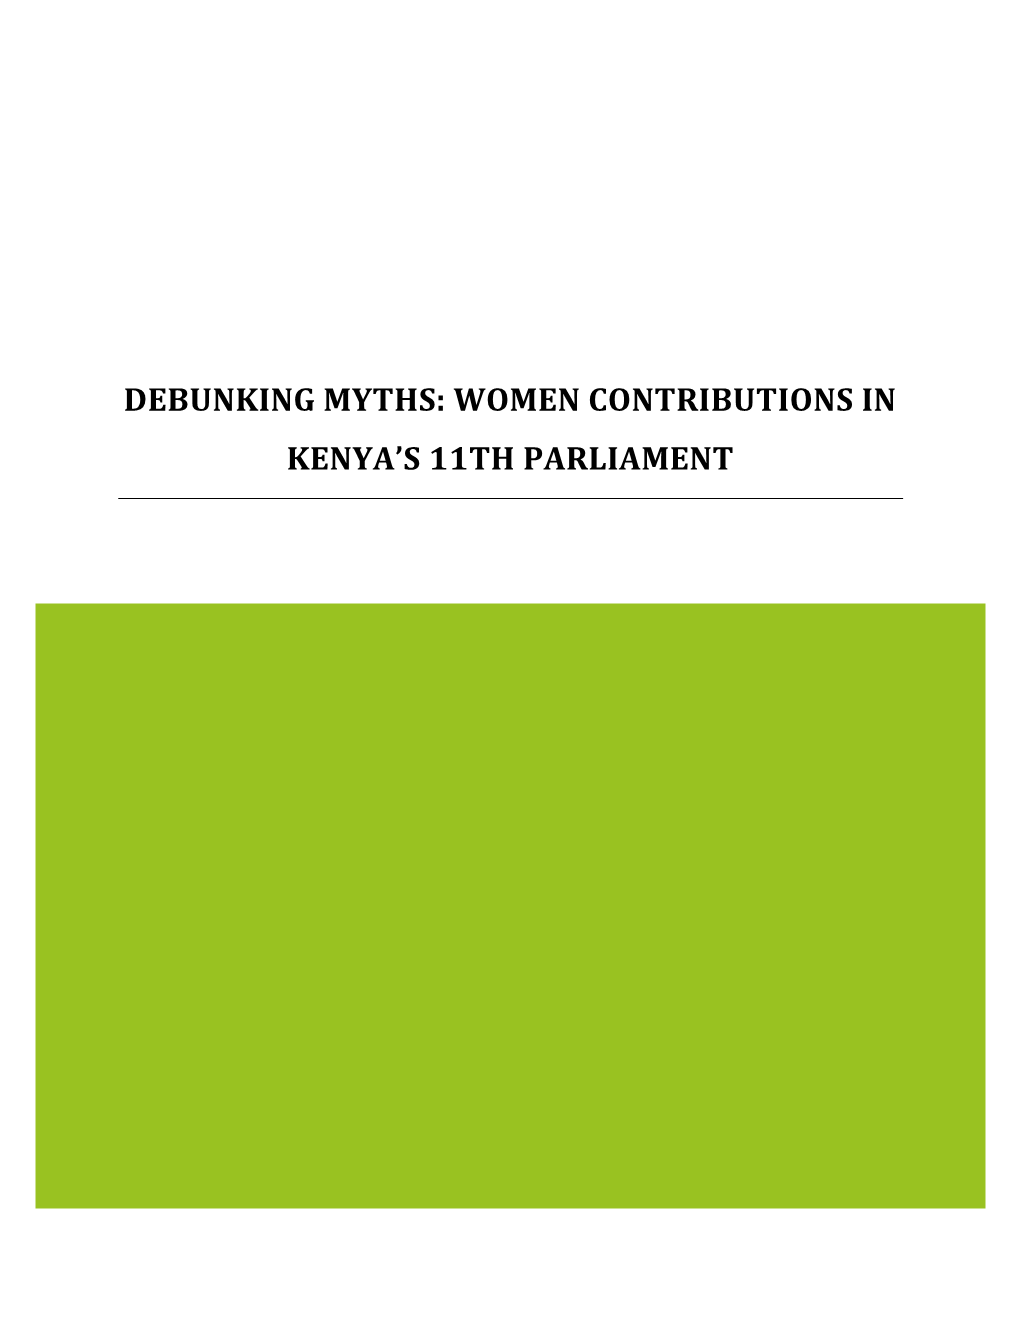 Debunking Myths: Women Contributions in Kenya's